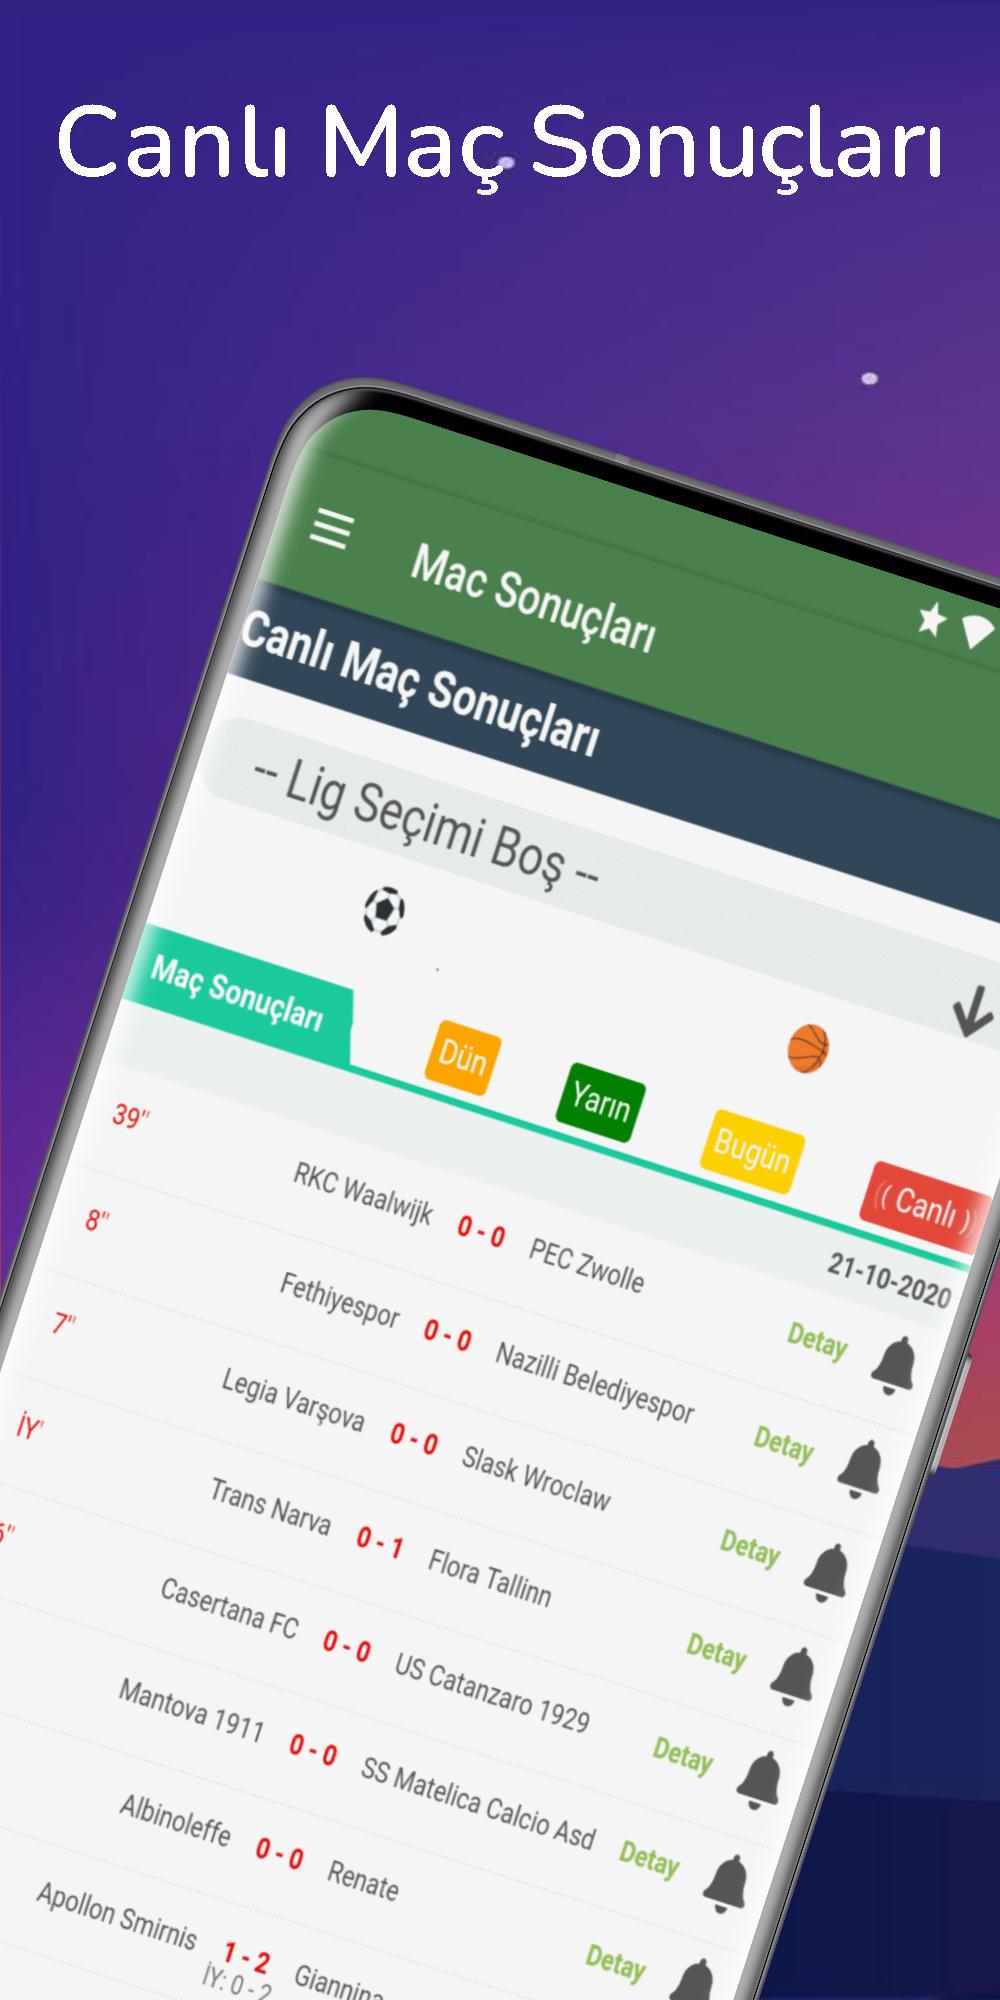 Canlı Maç Sonuçları - Canlı Skor for Android - APK Download